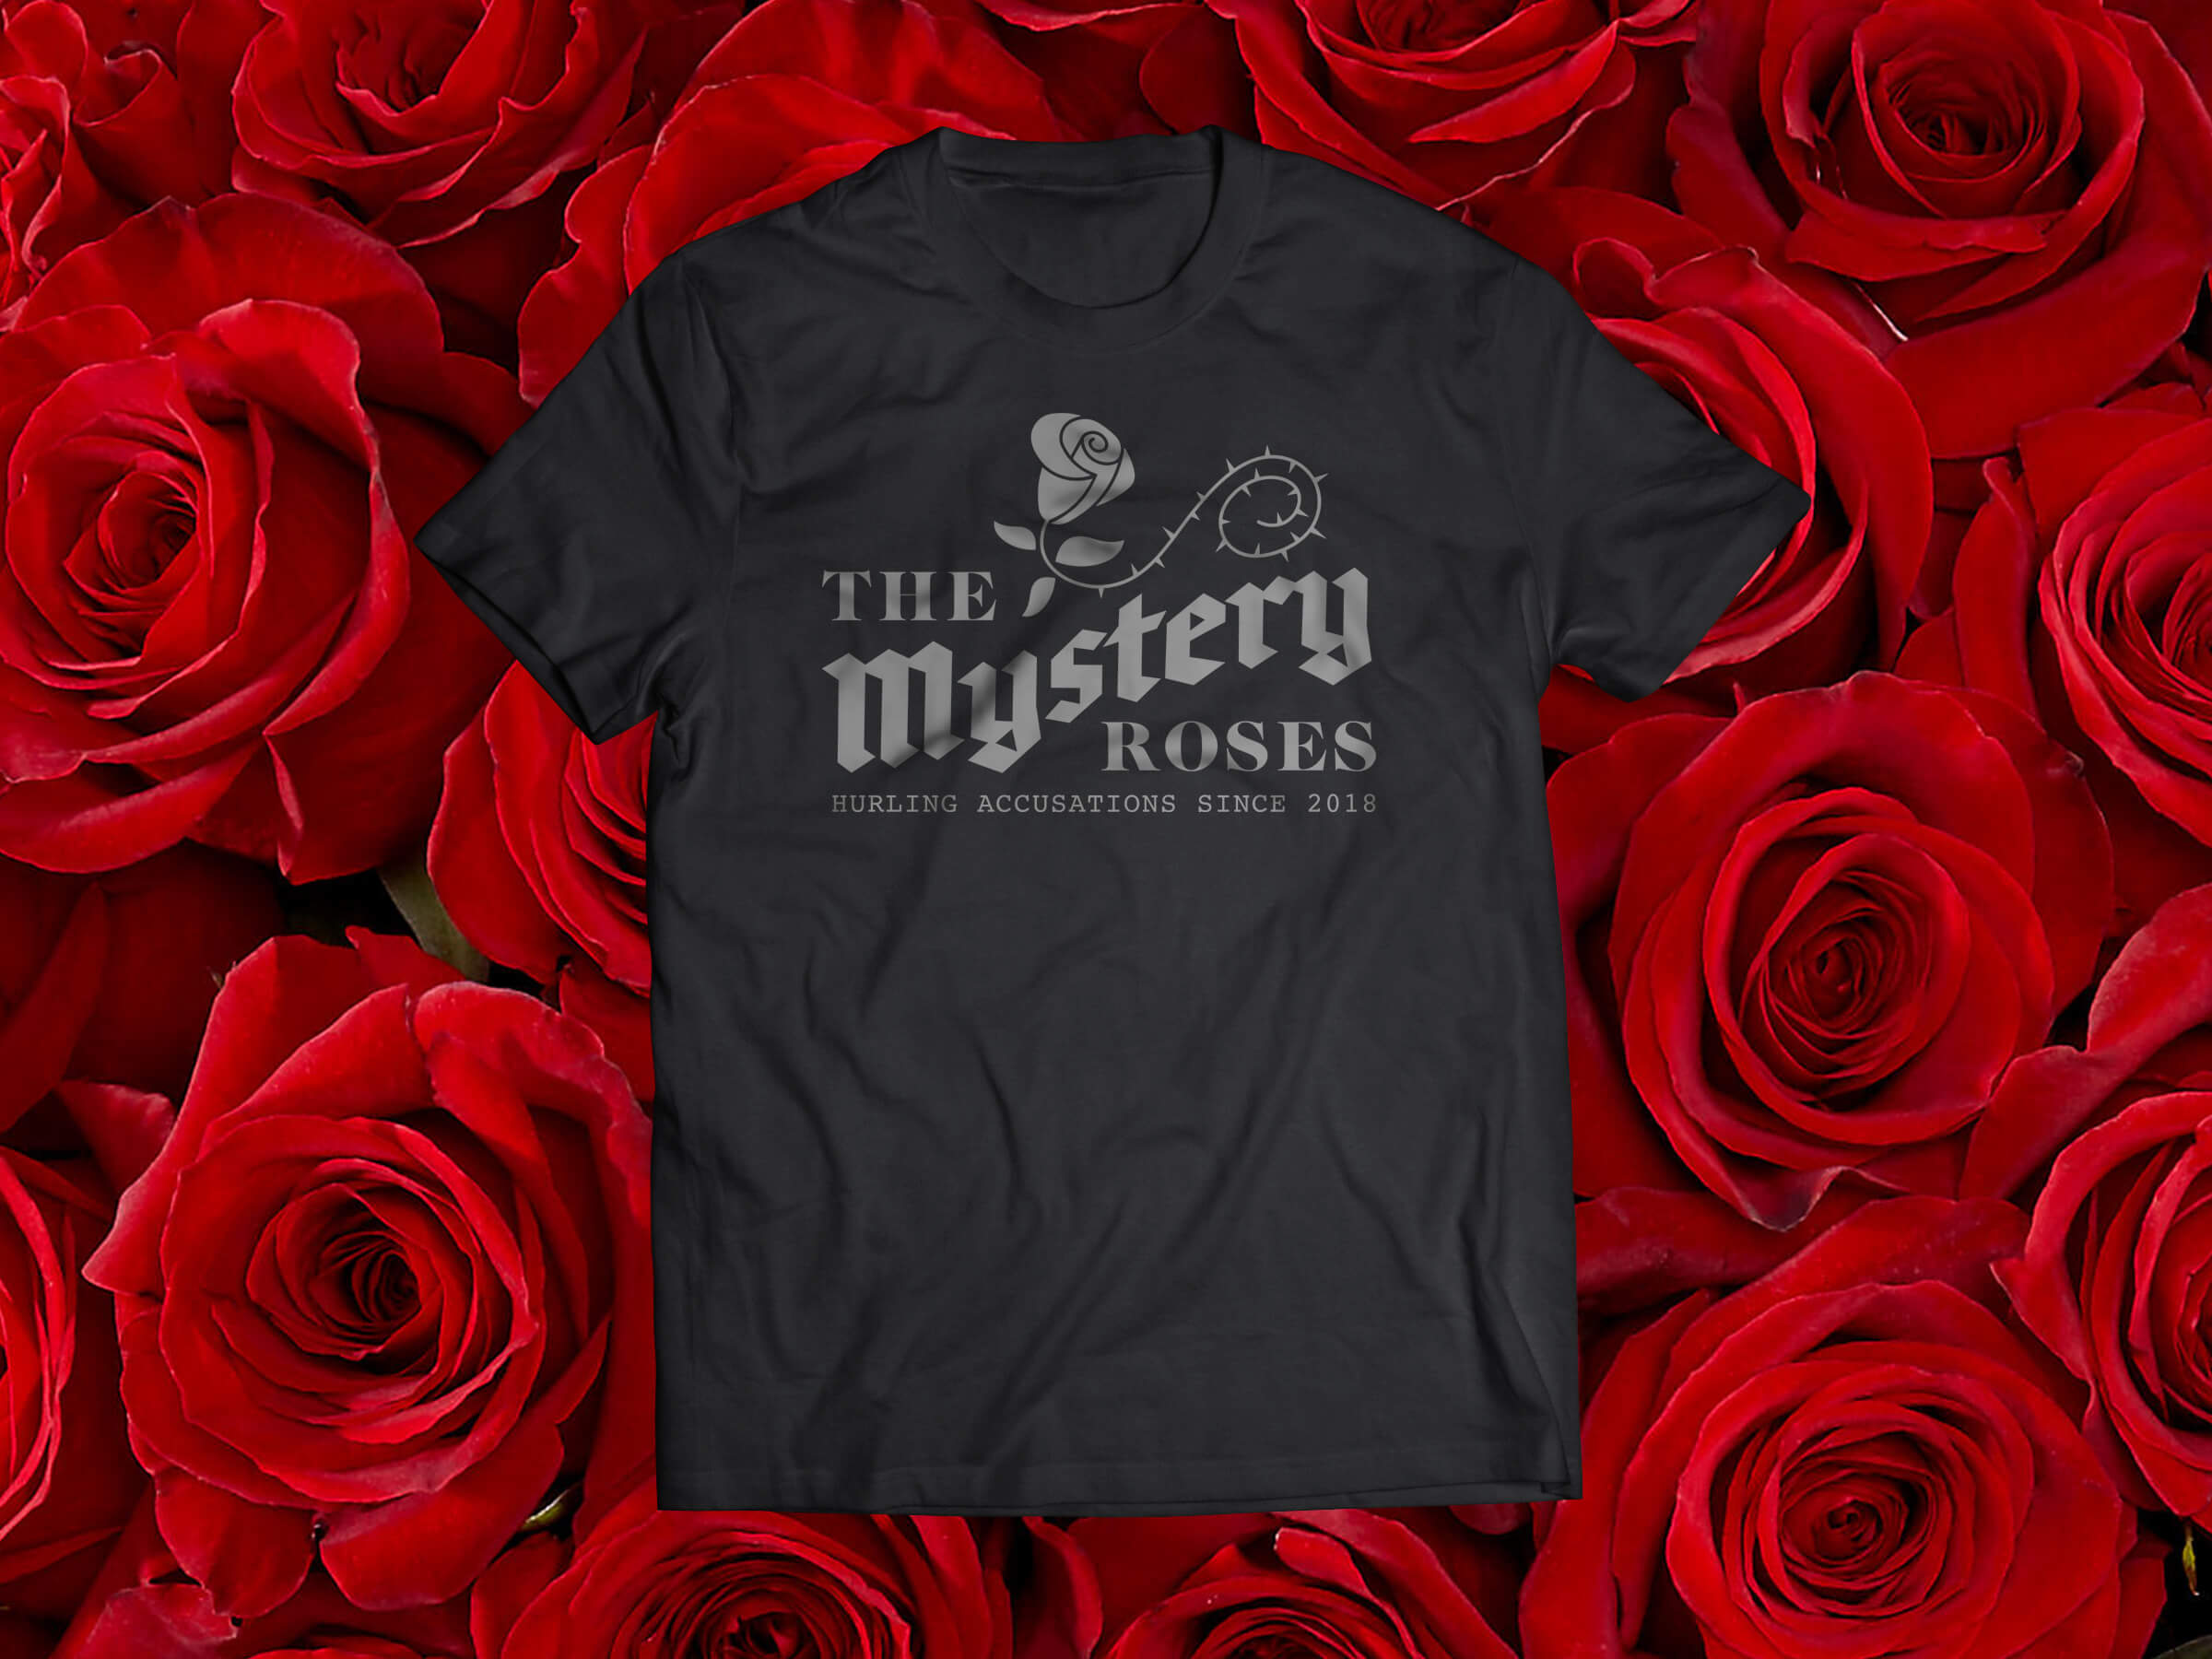 roses softball team tshirt design